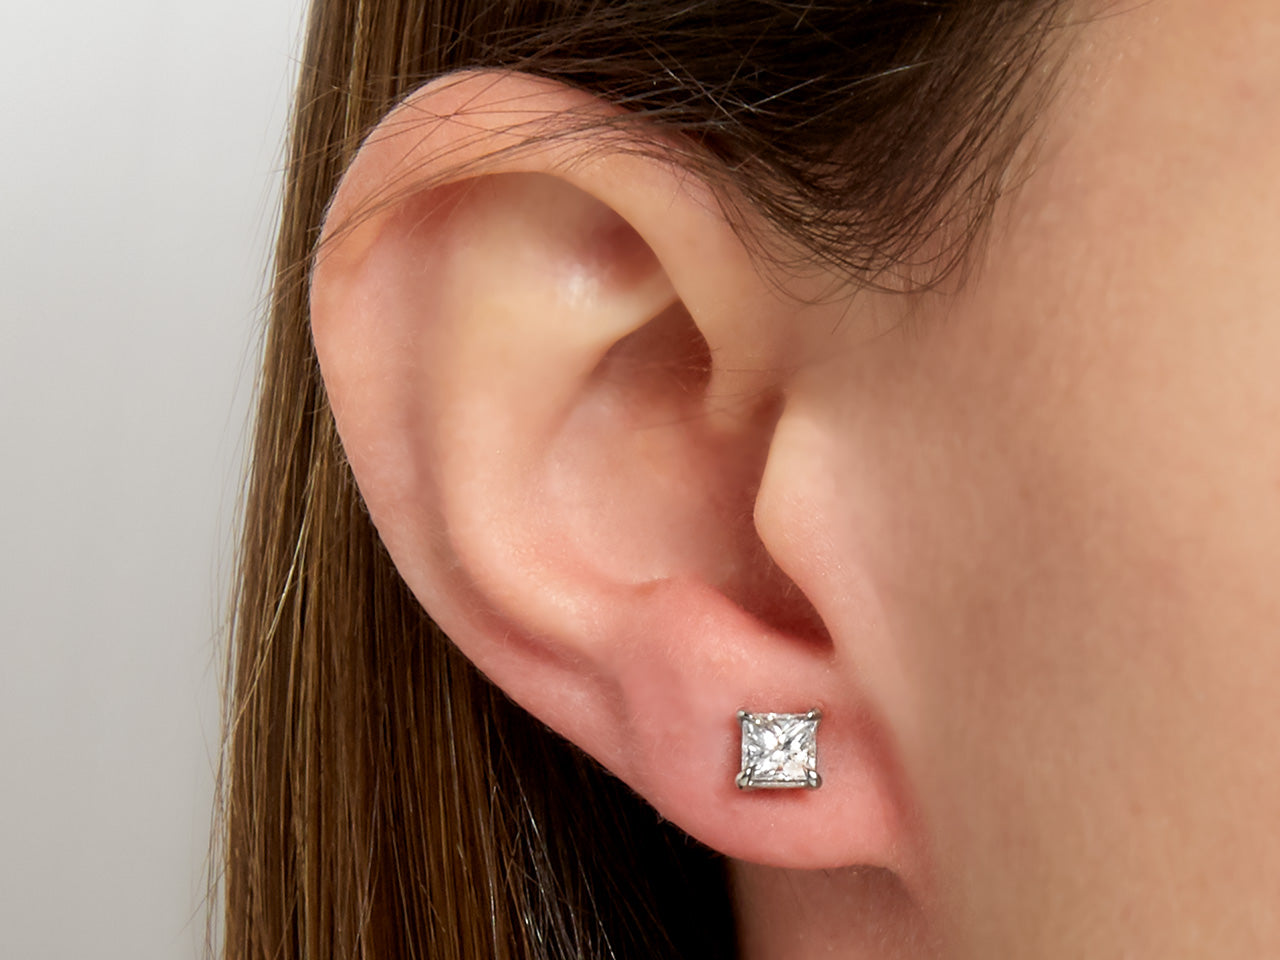 Beladora 'Bespoke' Princess-cut Diamond Stud Earrings, 1.08 total carats, E/VVS2, in Platinum